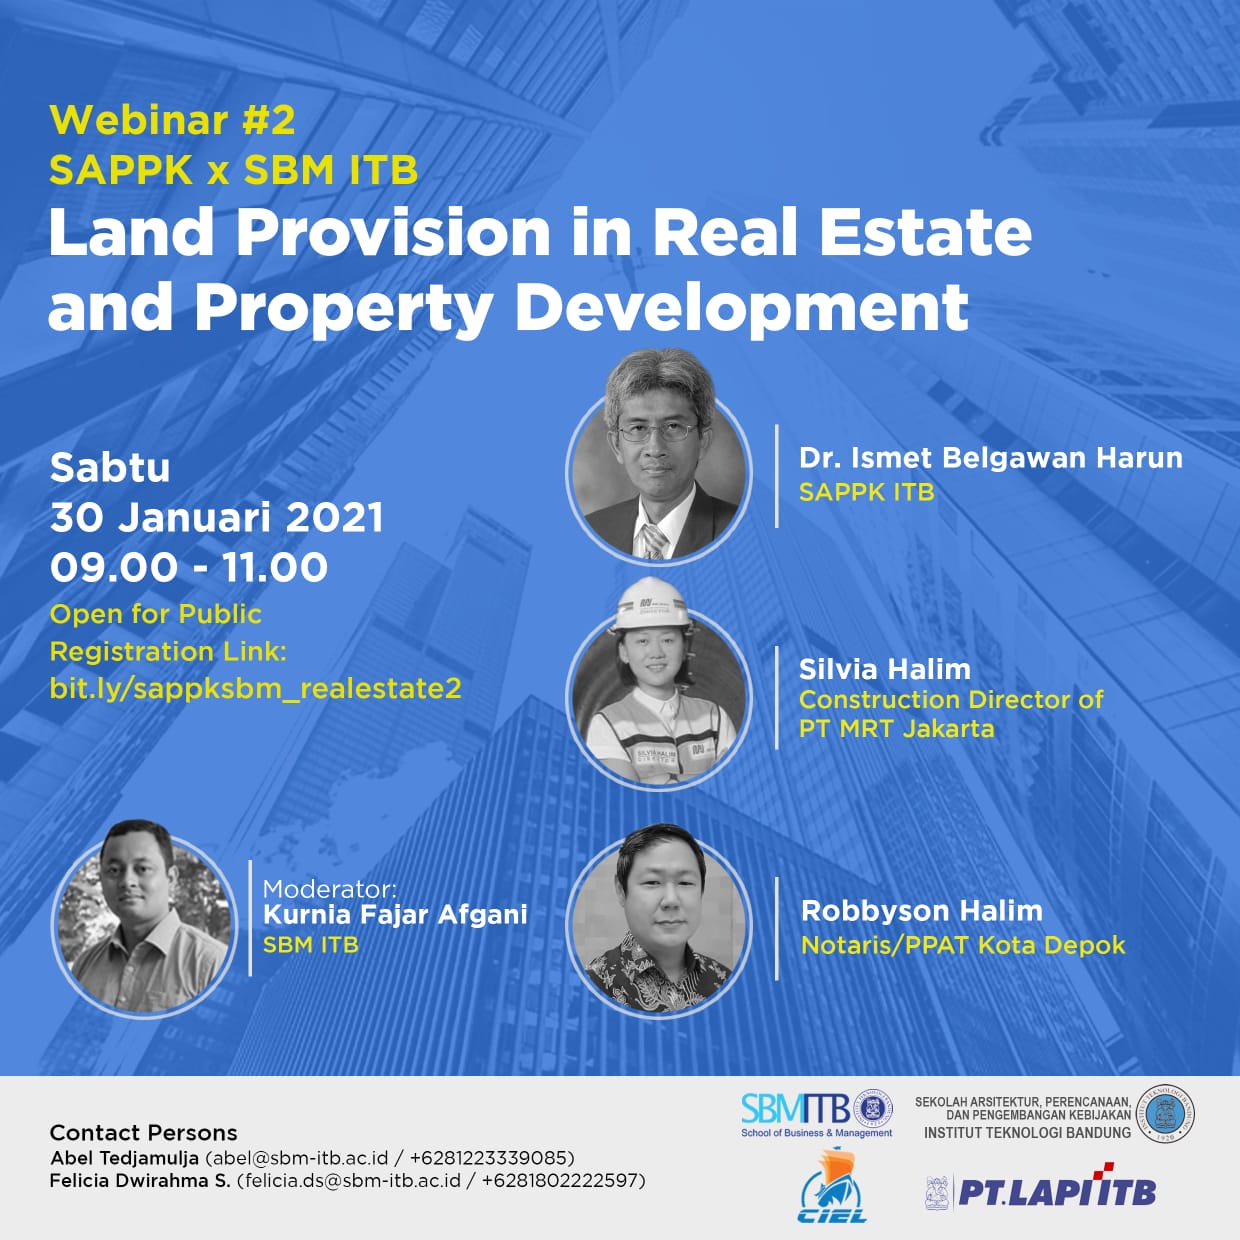 Webinar “SAPPK x SBM ITB” Sesi 2: Land Provision in Real Estate and Property Development